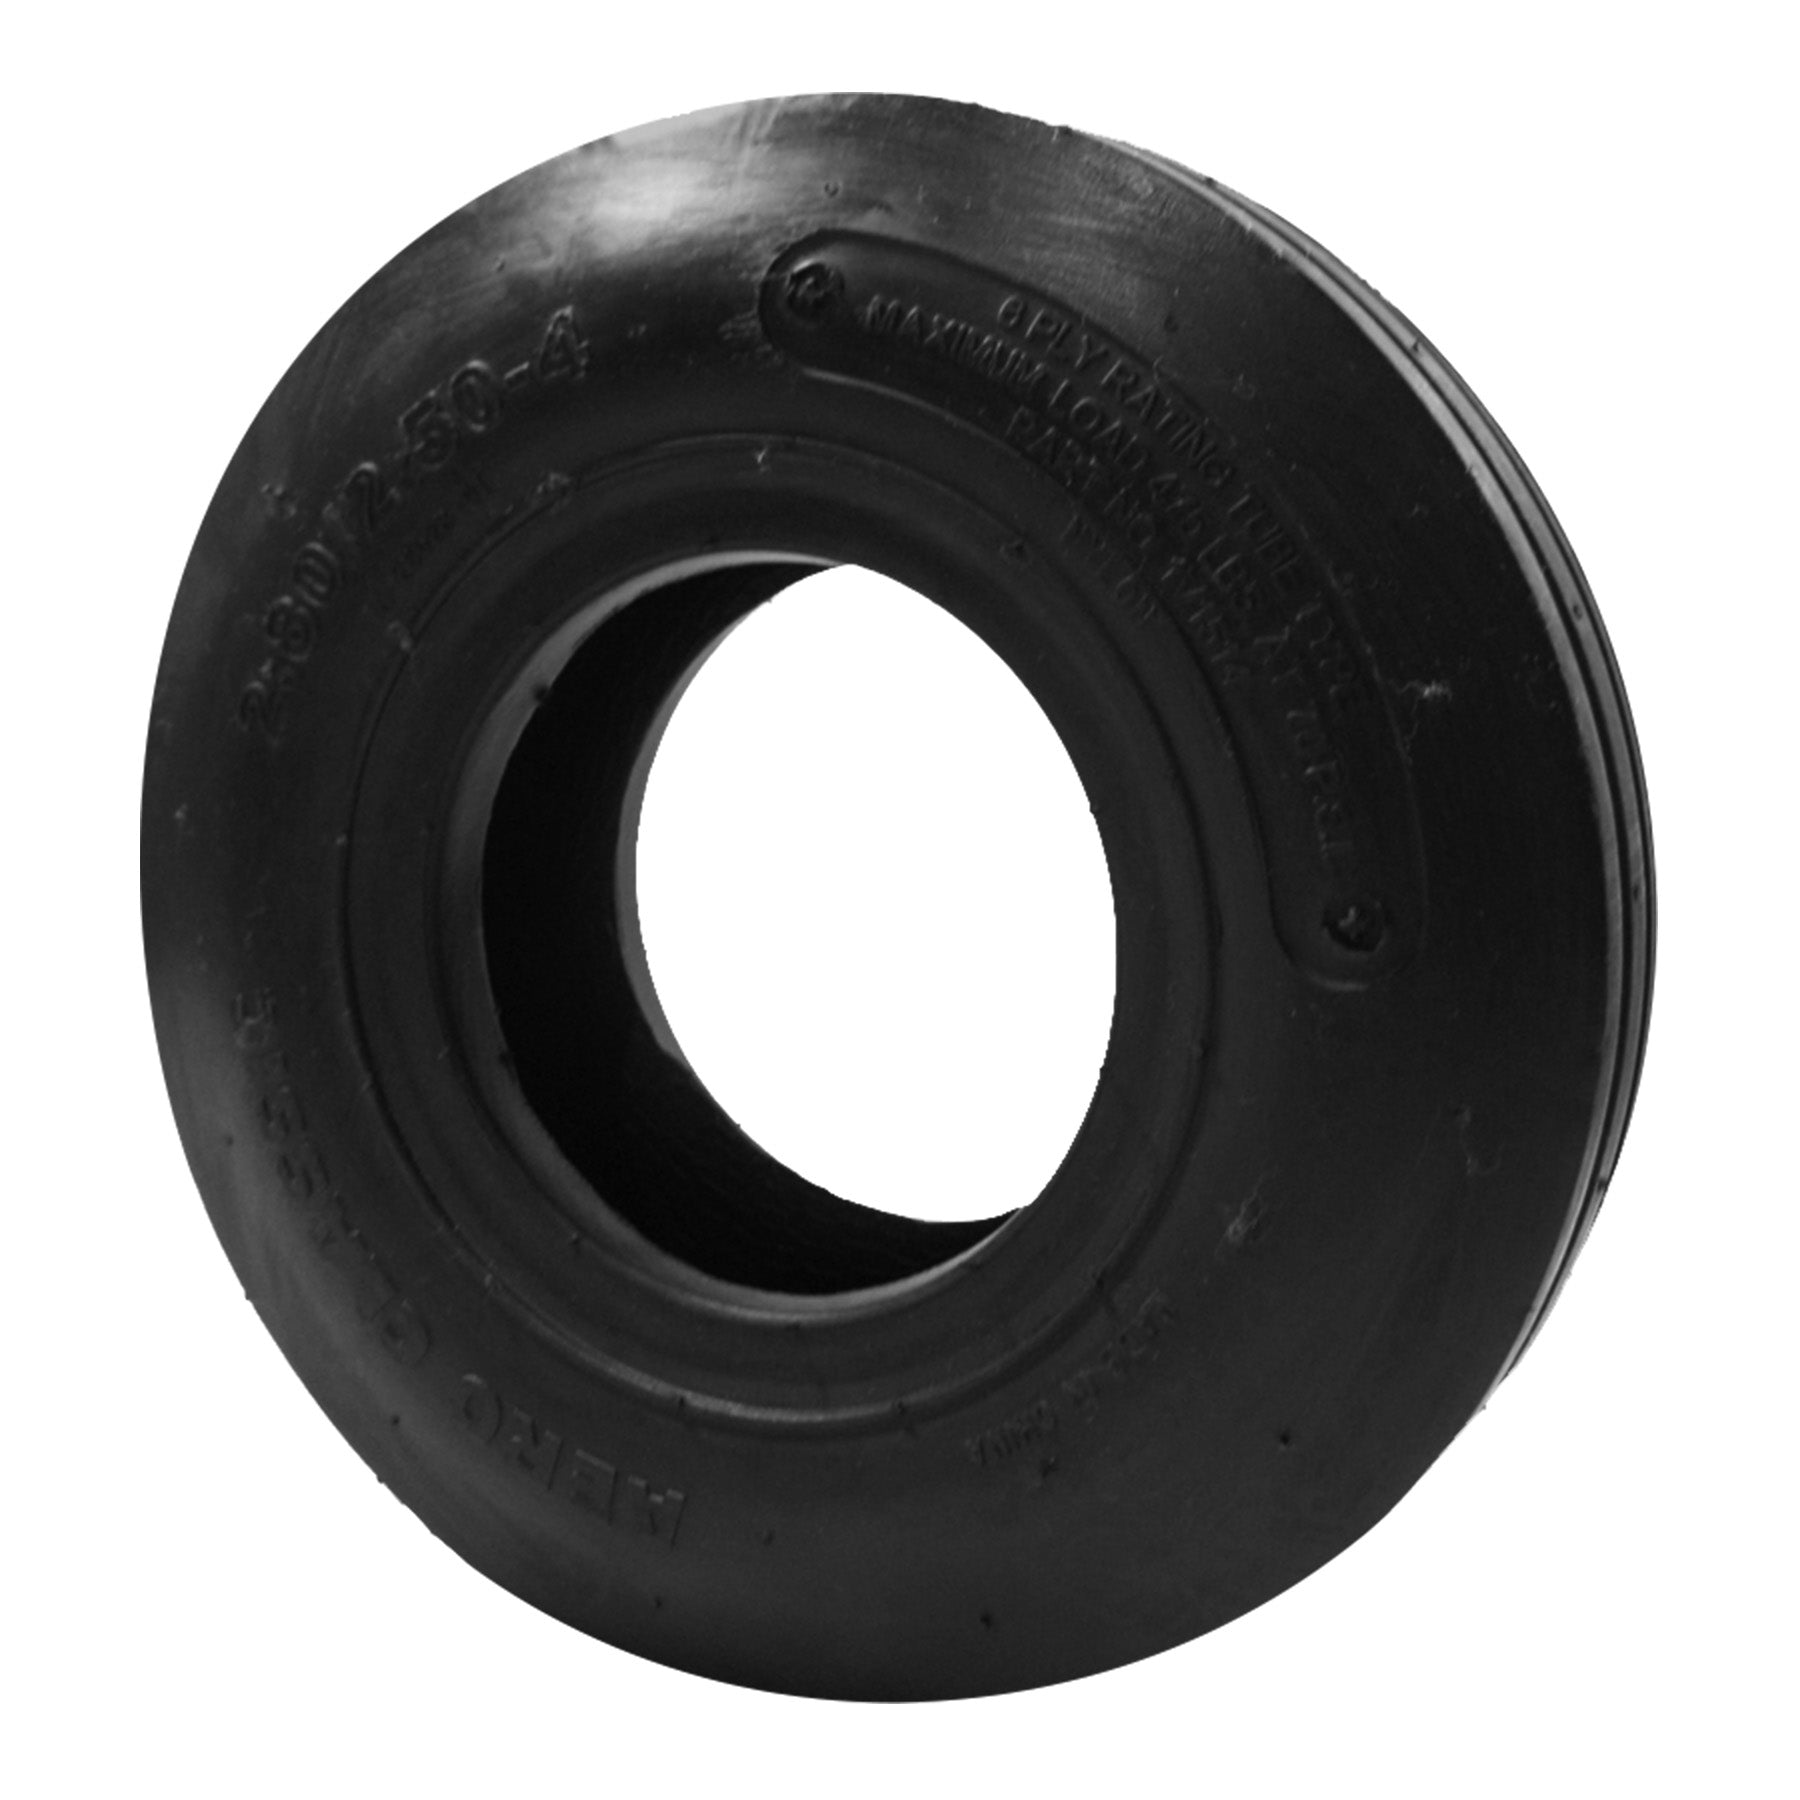 Alaska Gear Company Standard 8-Inch Tailwheel Tire - 280X250-4